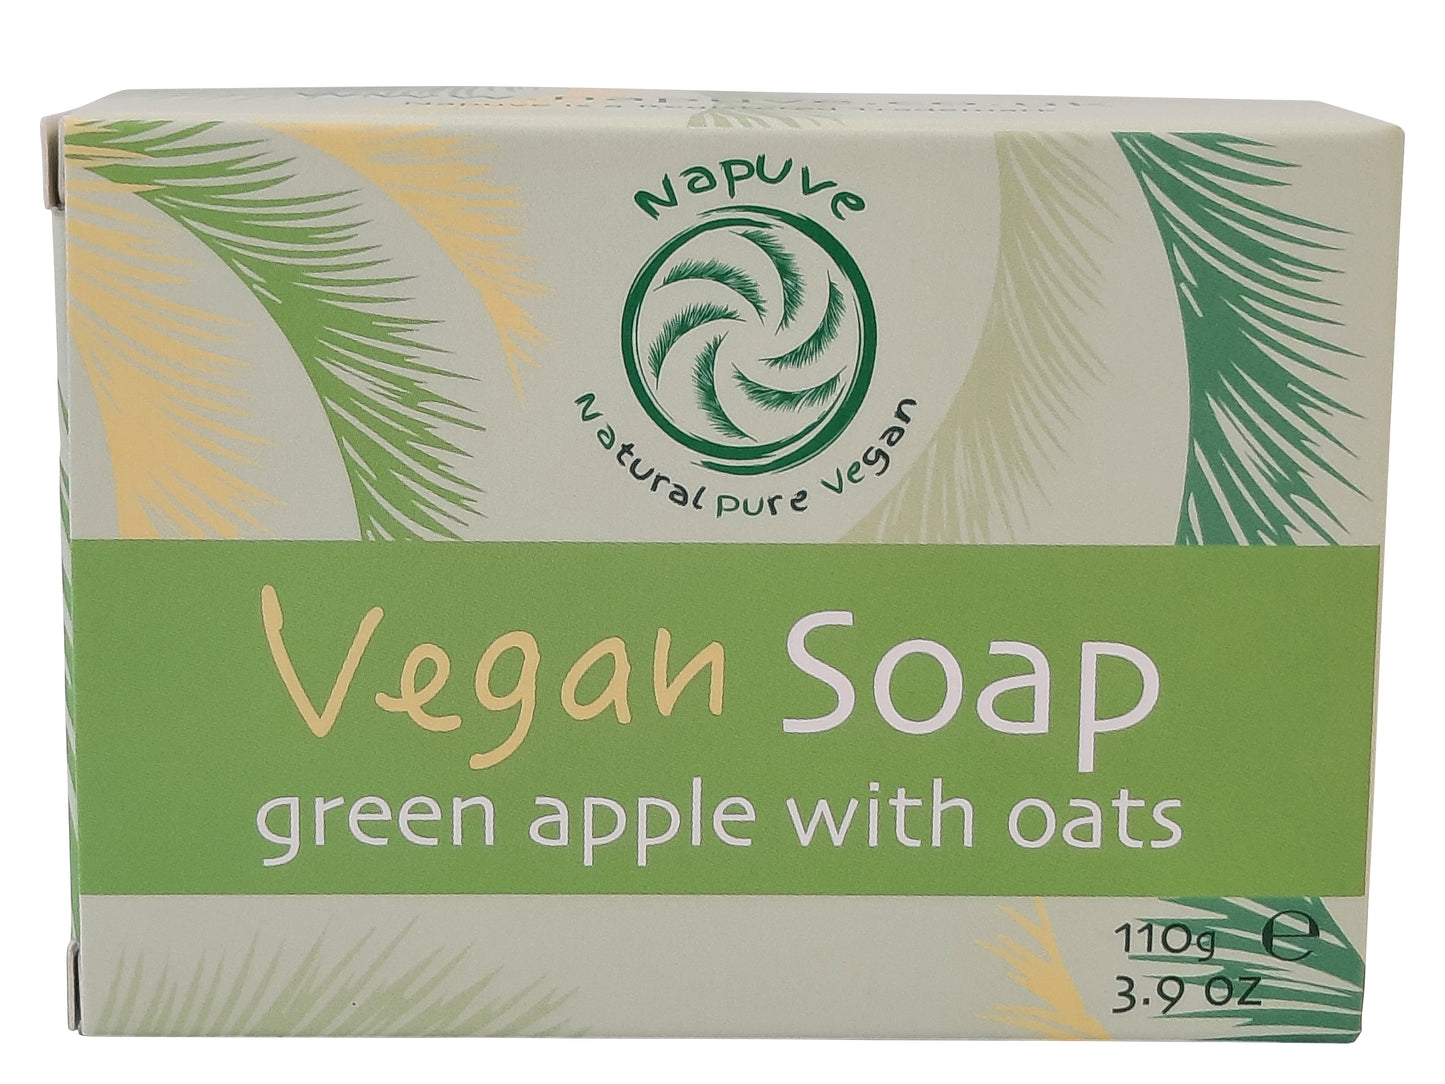 Vegan Soap Green Apple with Oats 110g/3.9oz